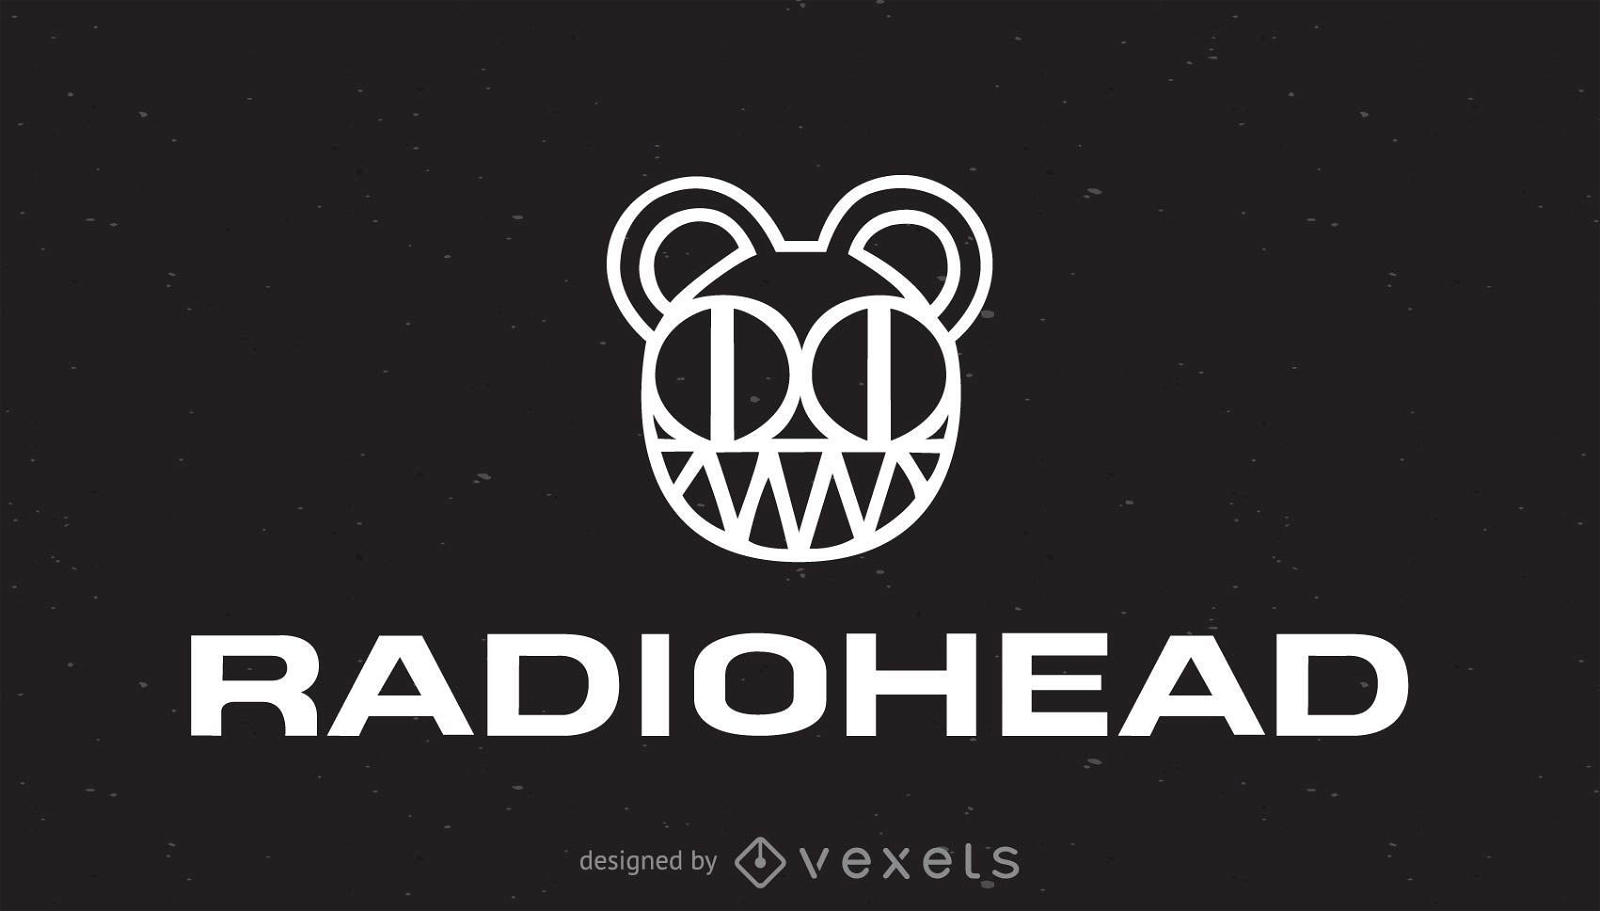 Radiohead logo 